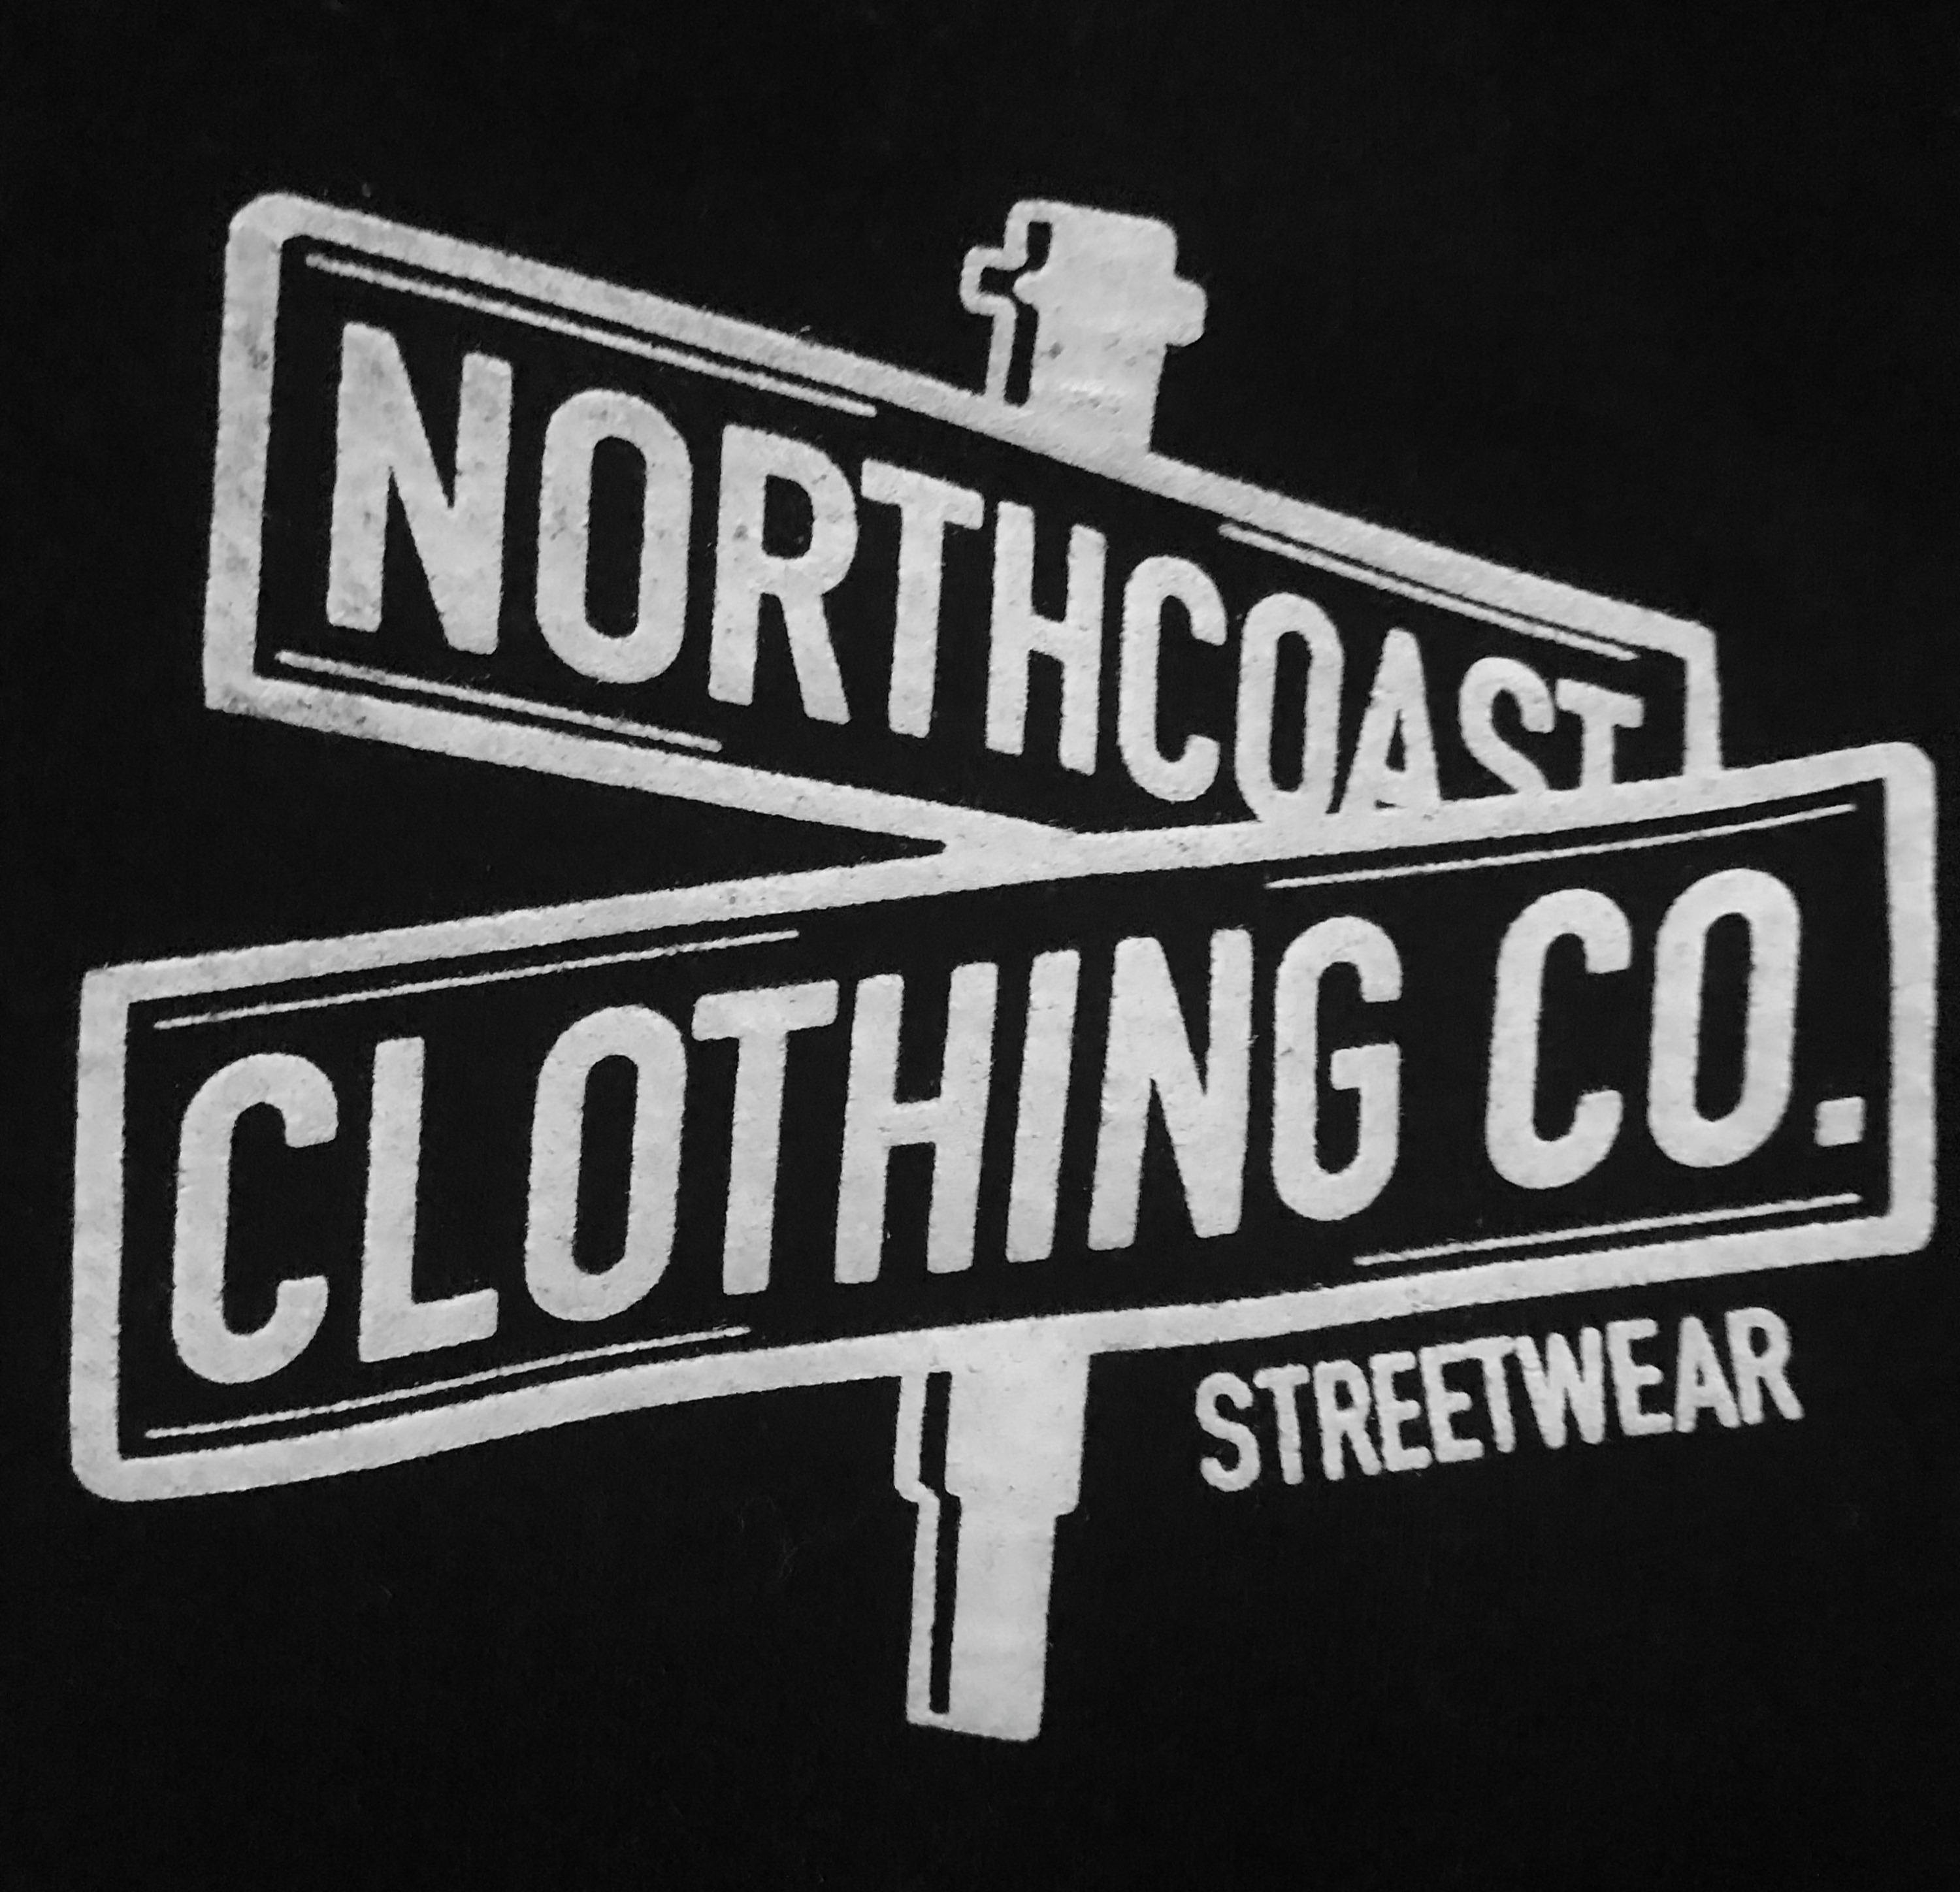  NORTHCOAST CLOTHING CO. STREETWEAR